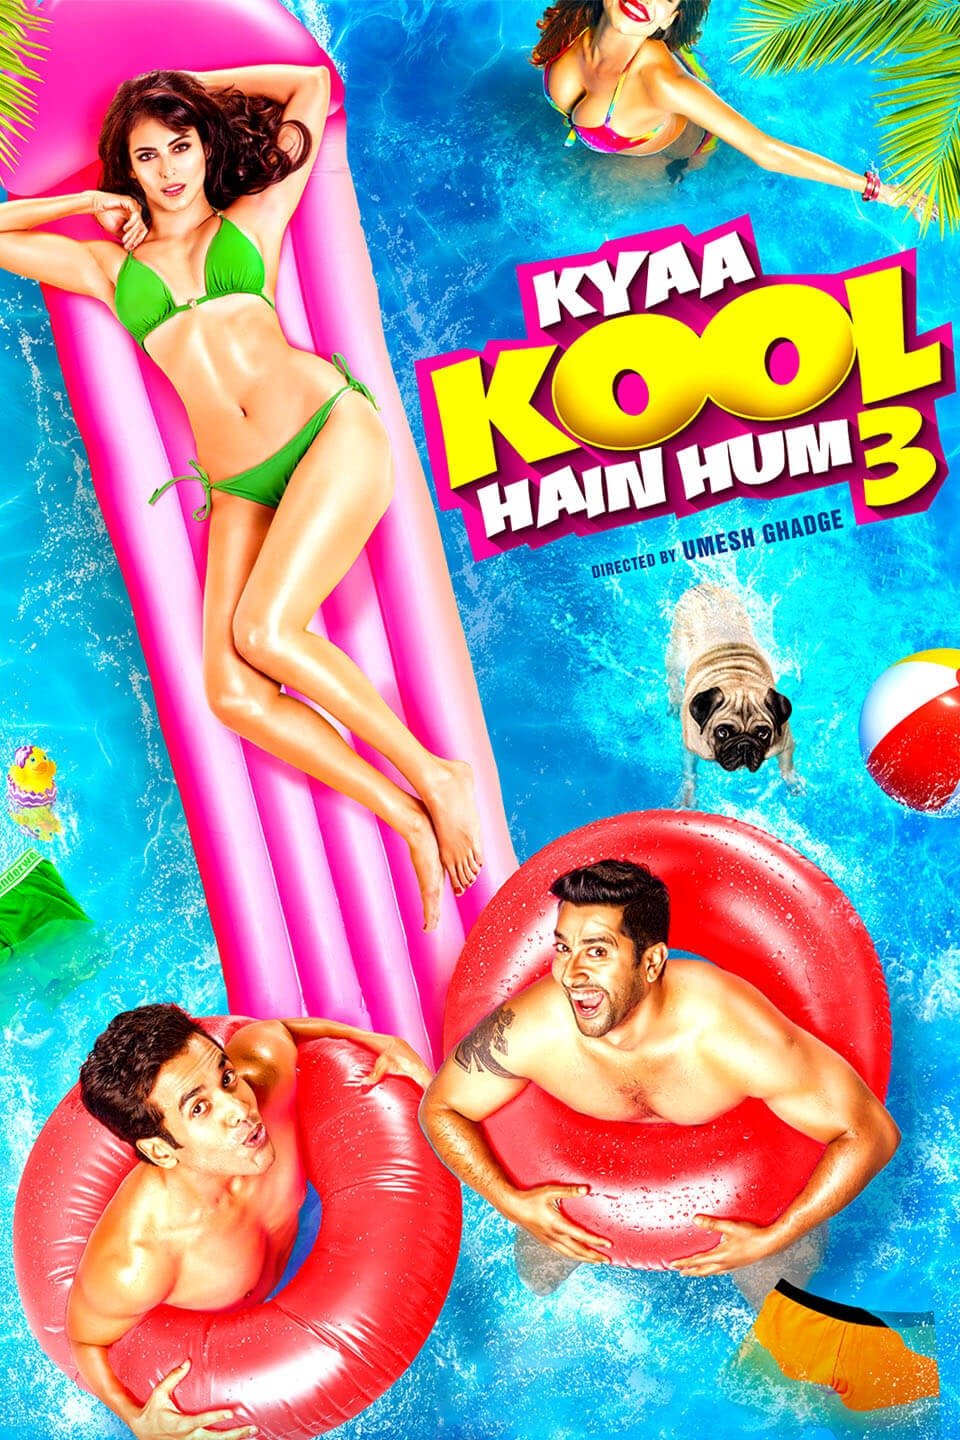 Kyaa Kool Hain Hum 3 (2022) HDRip Hindi Movie Watch Online Free